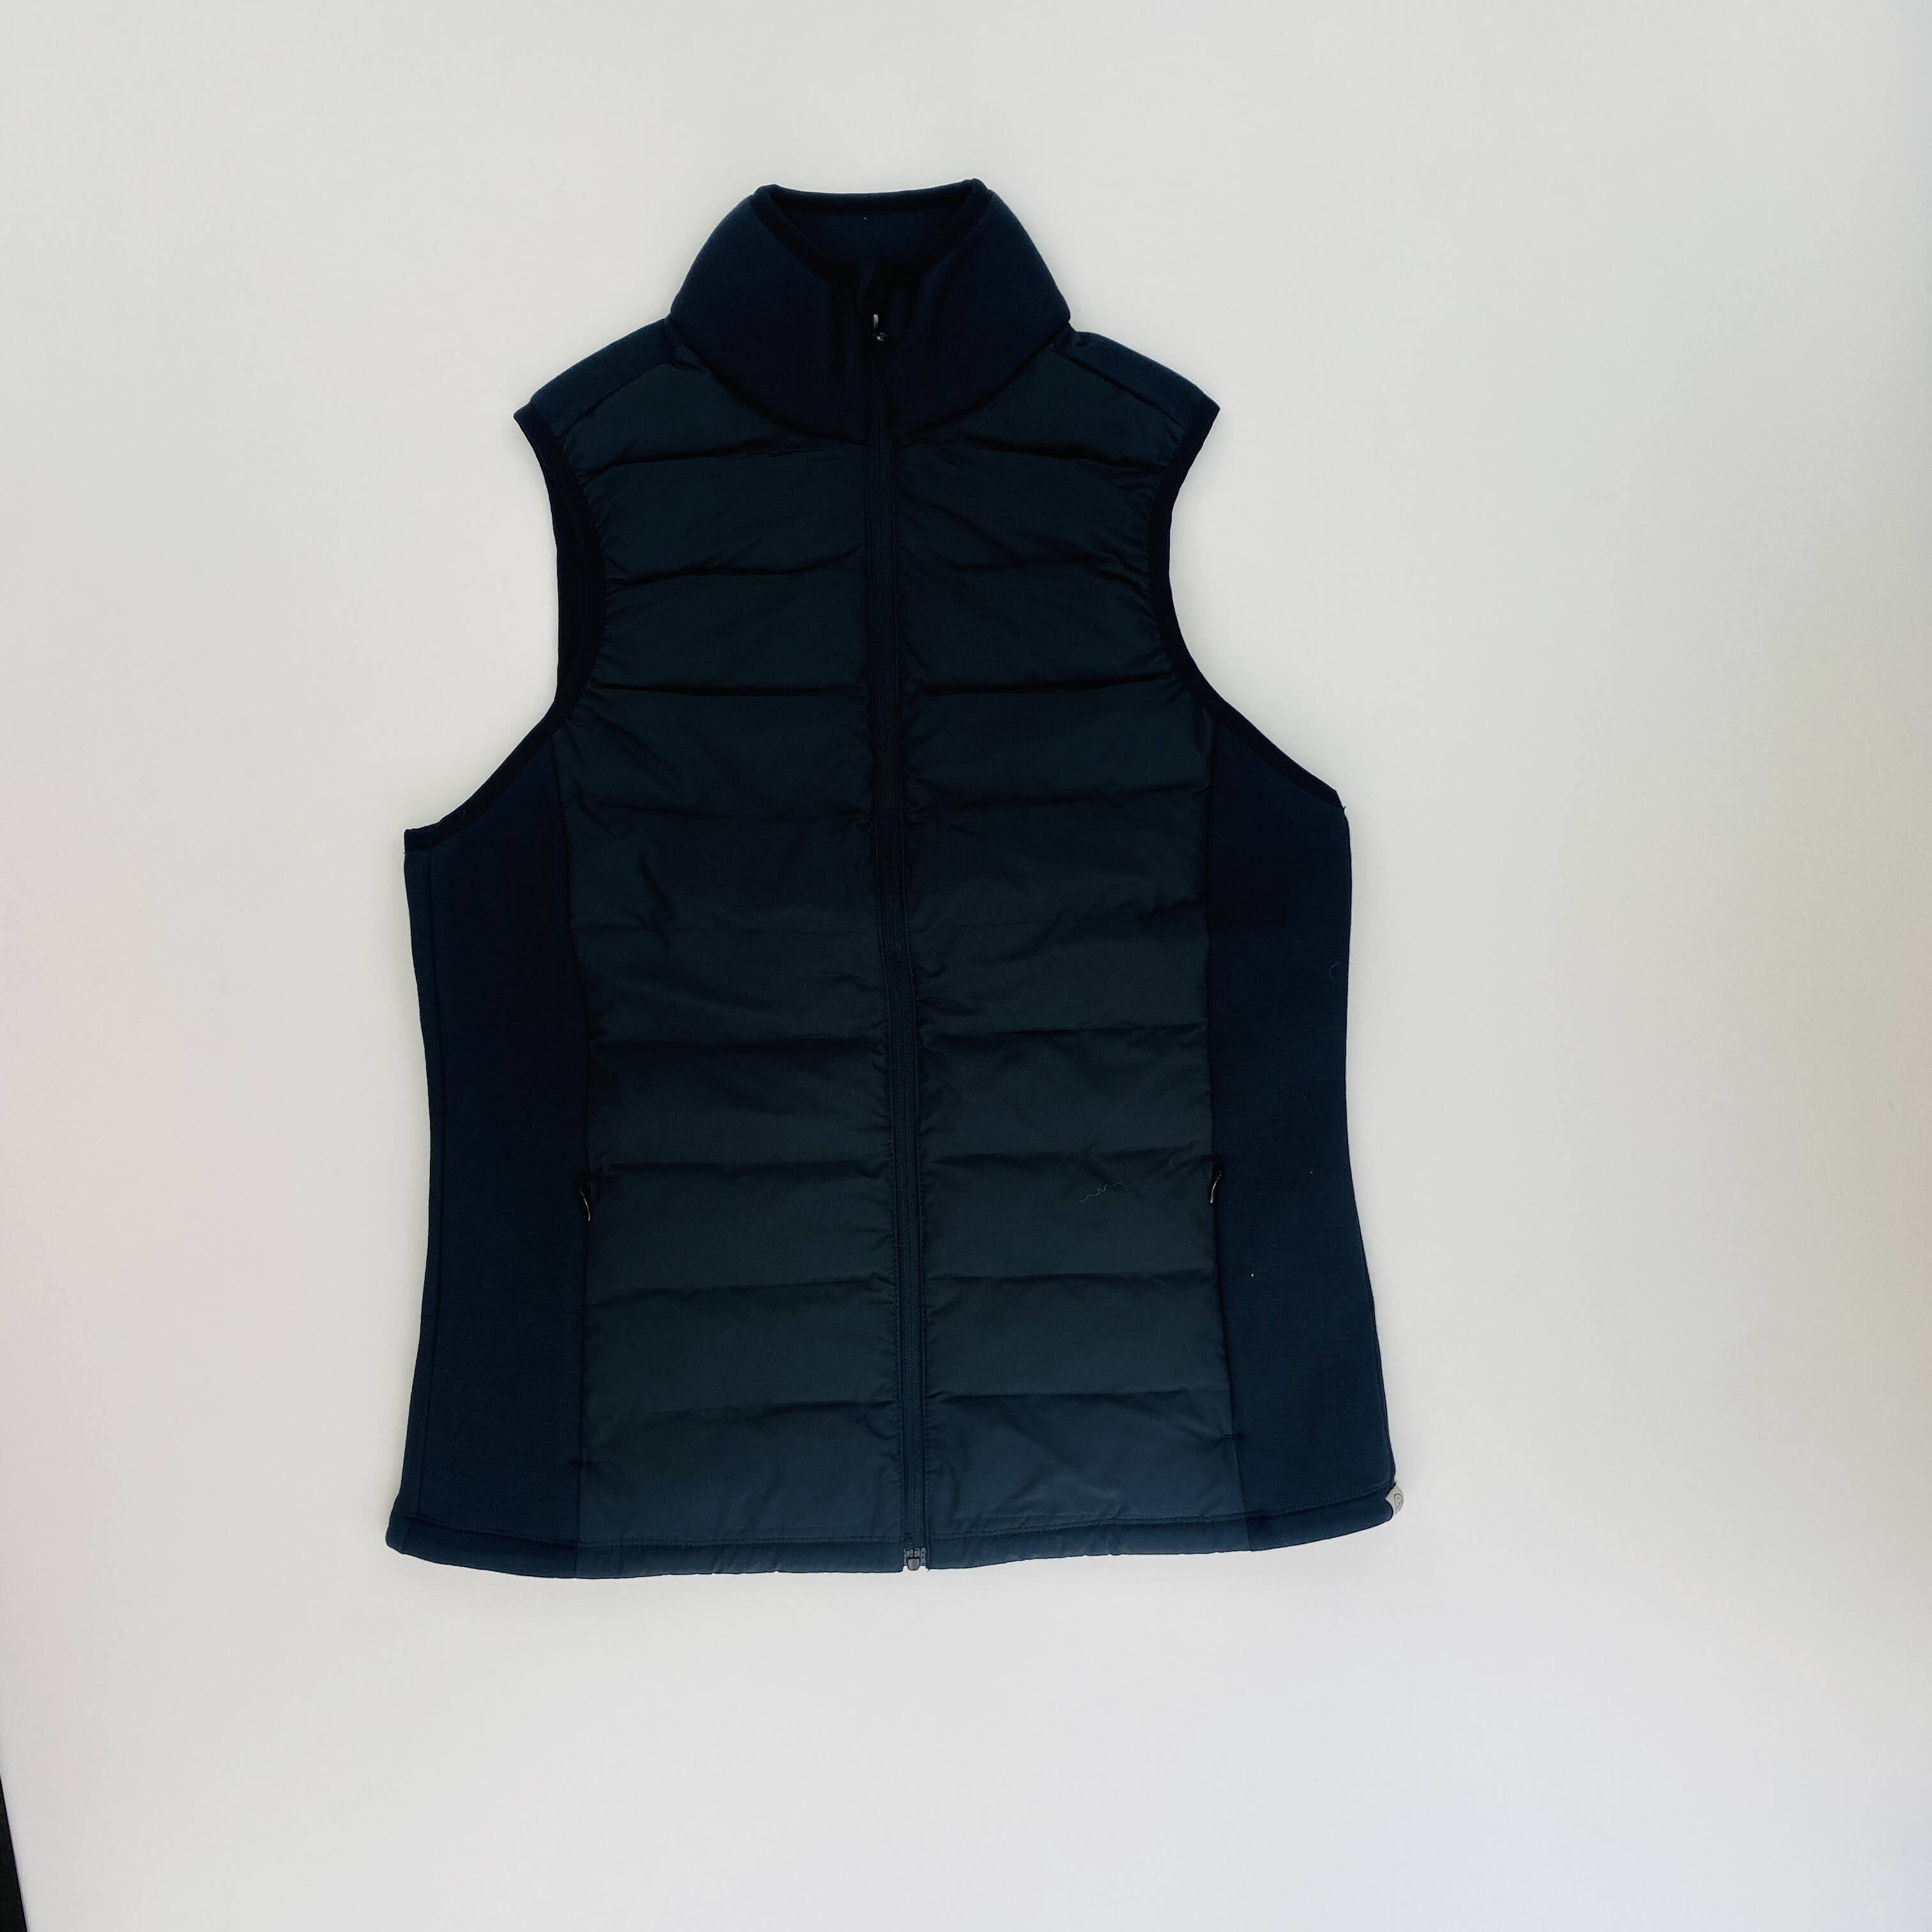 Wrangler Athletic Hybrid Vest - Second Hand Synthetic jacket - Women's - Black - S | Hardloop